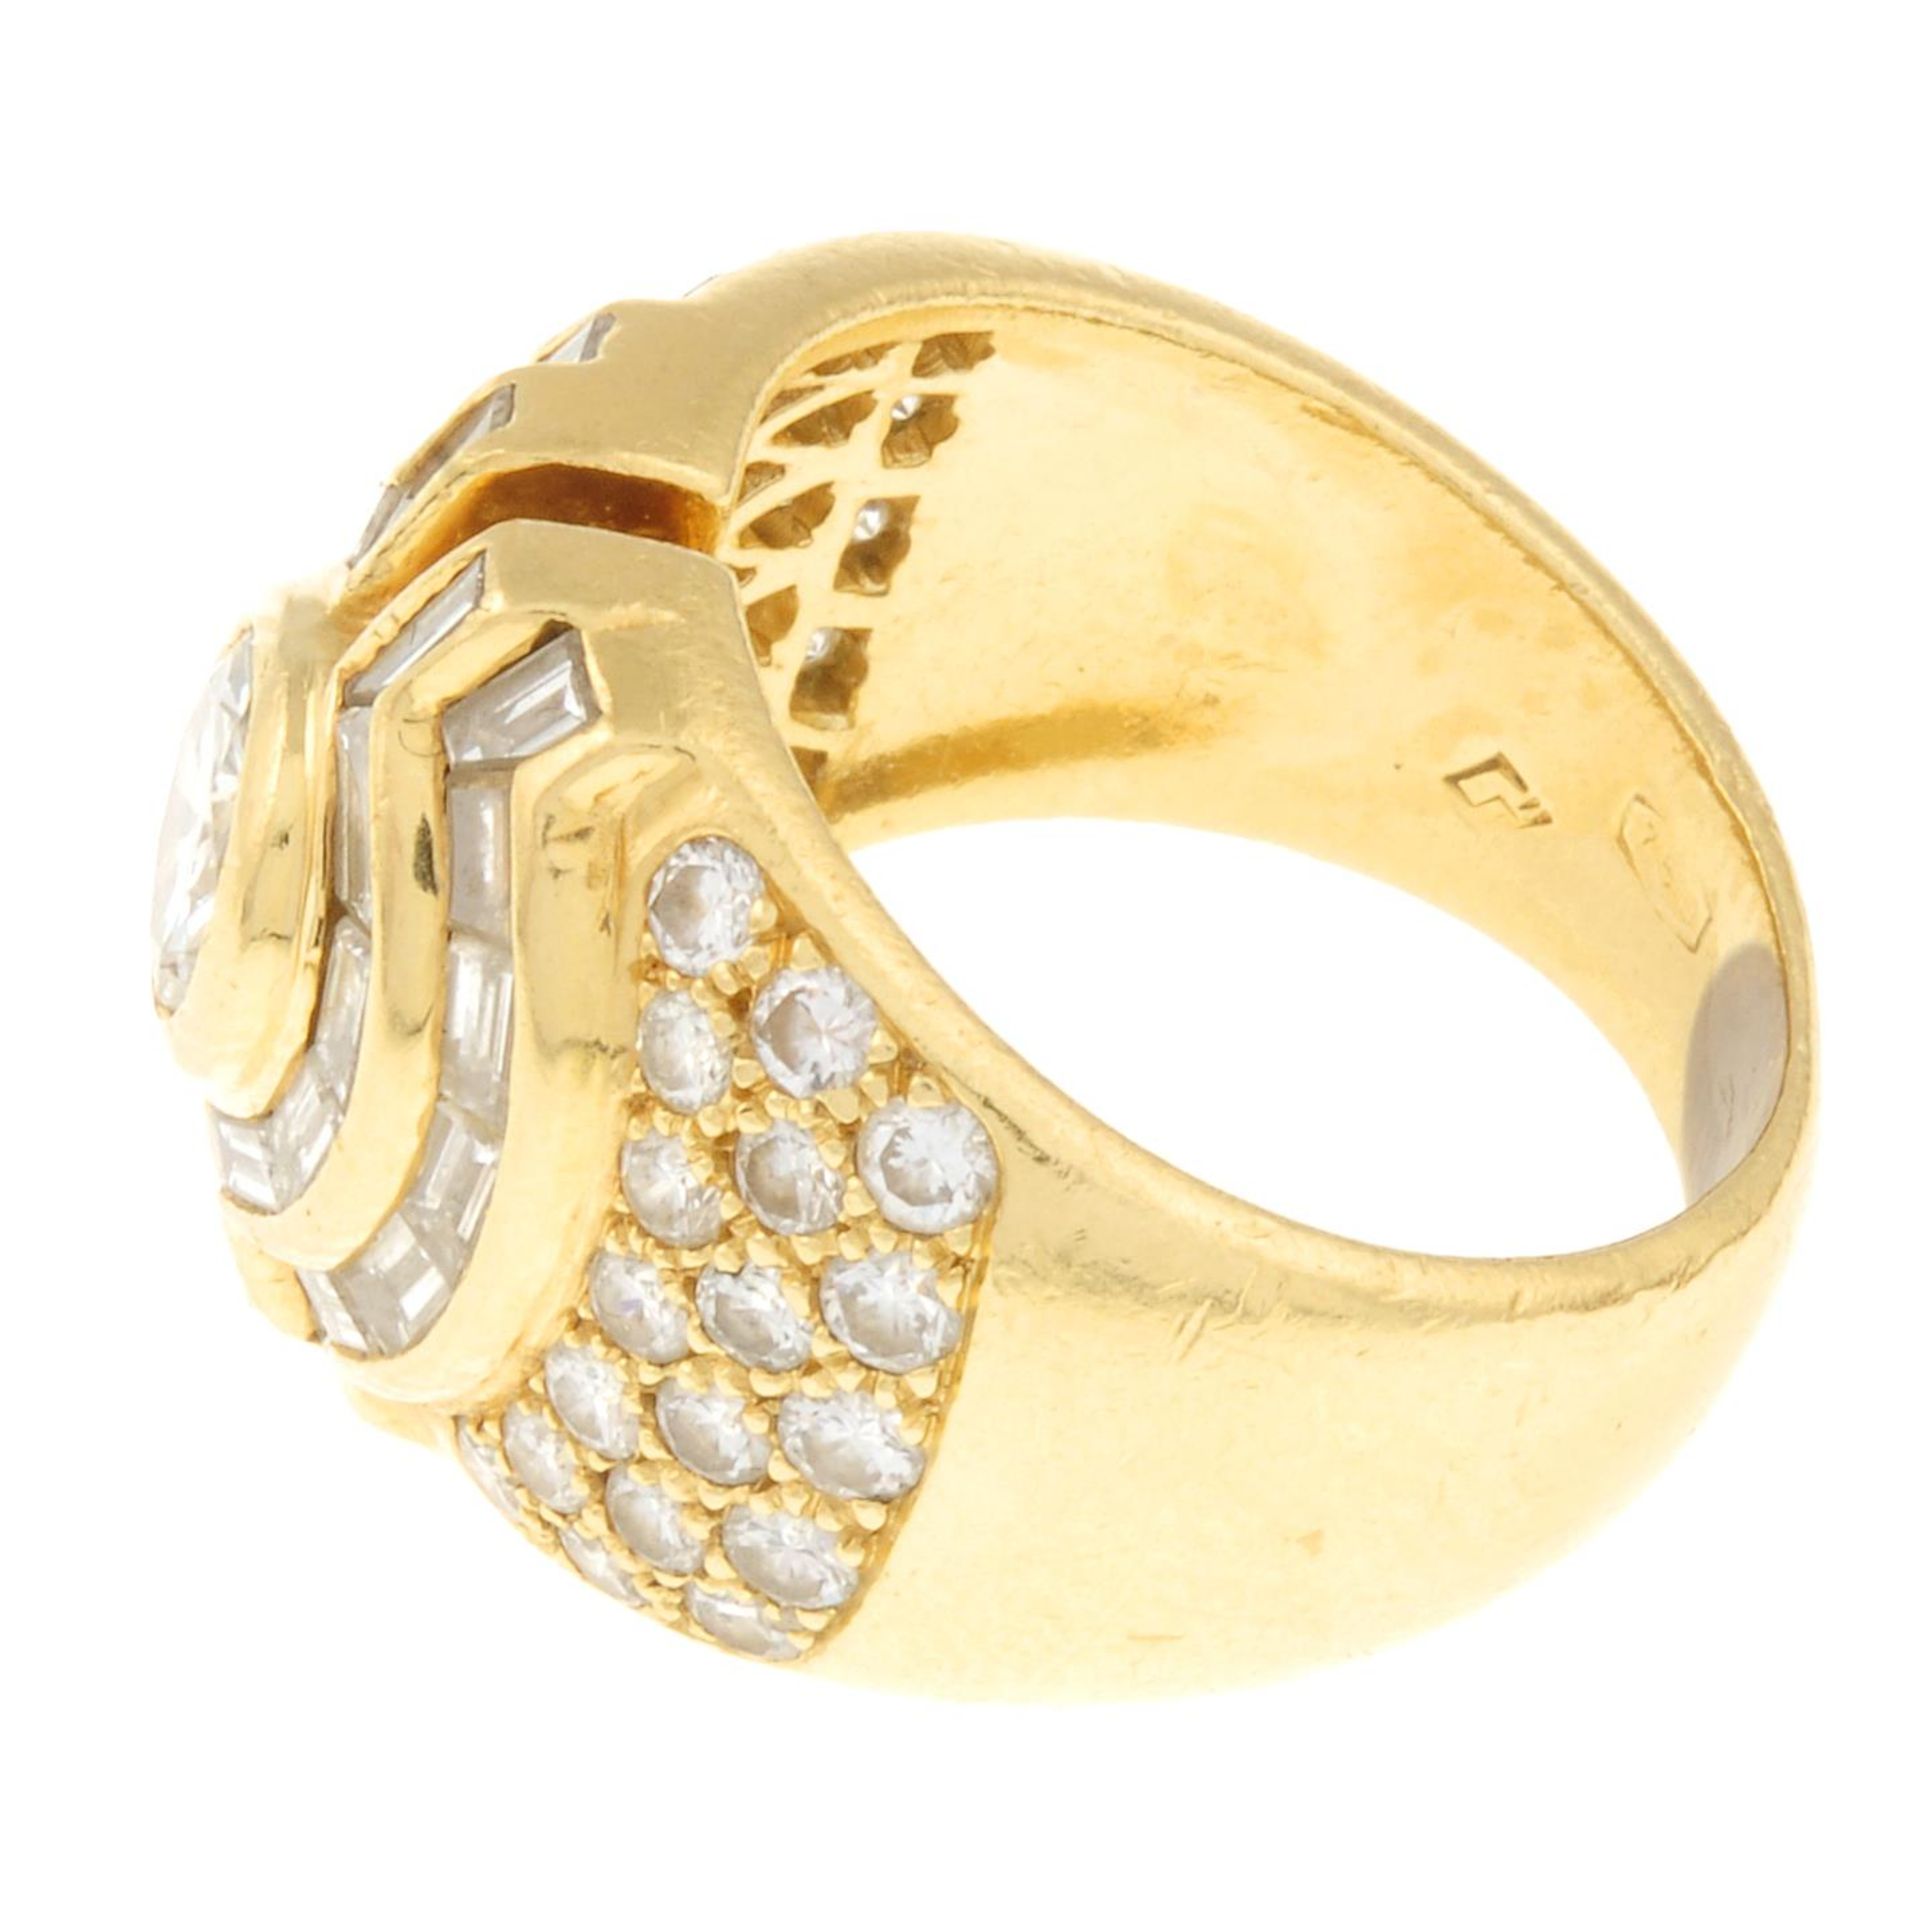 A vari-cut diamond ring. - Image 2 of 4